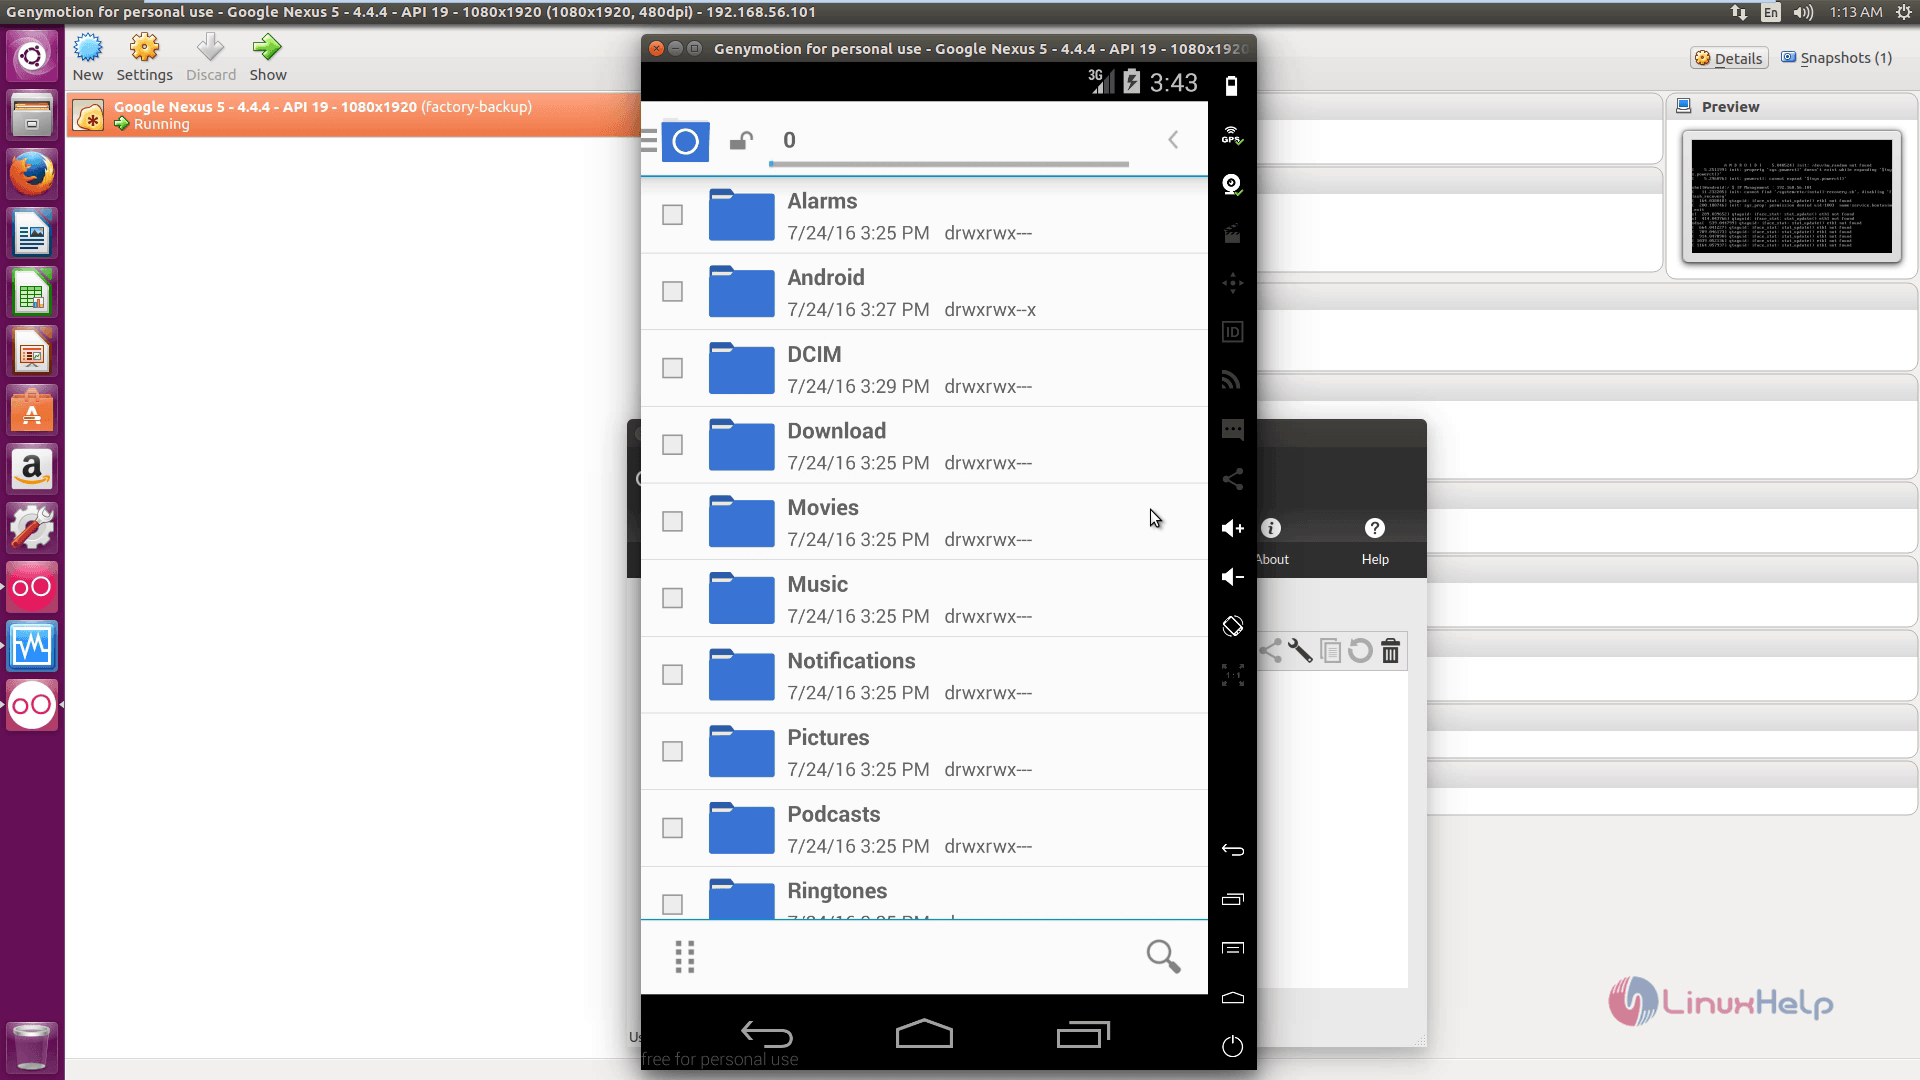 run-Android-Apps-Ubuntu-Genymotion-Emulator-testing-and-presentation-File-Manager